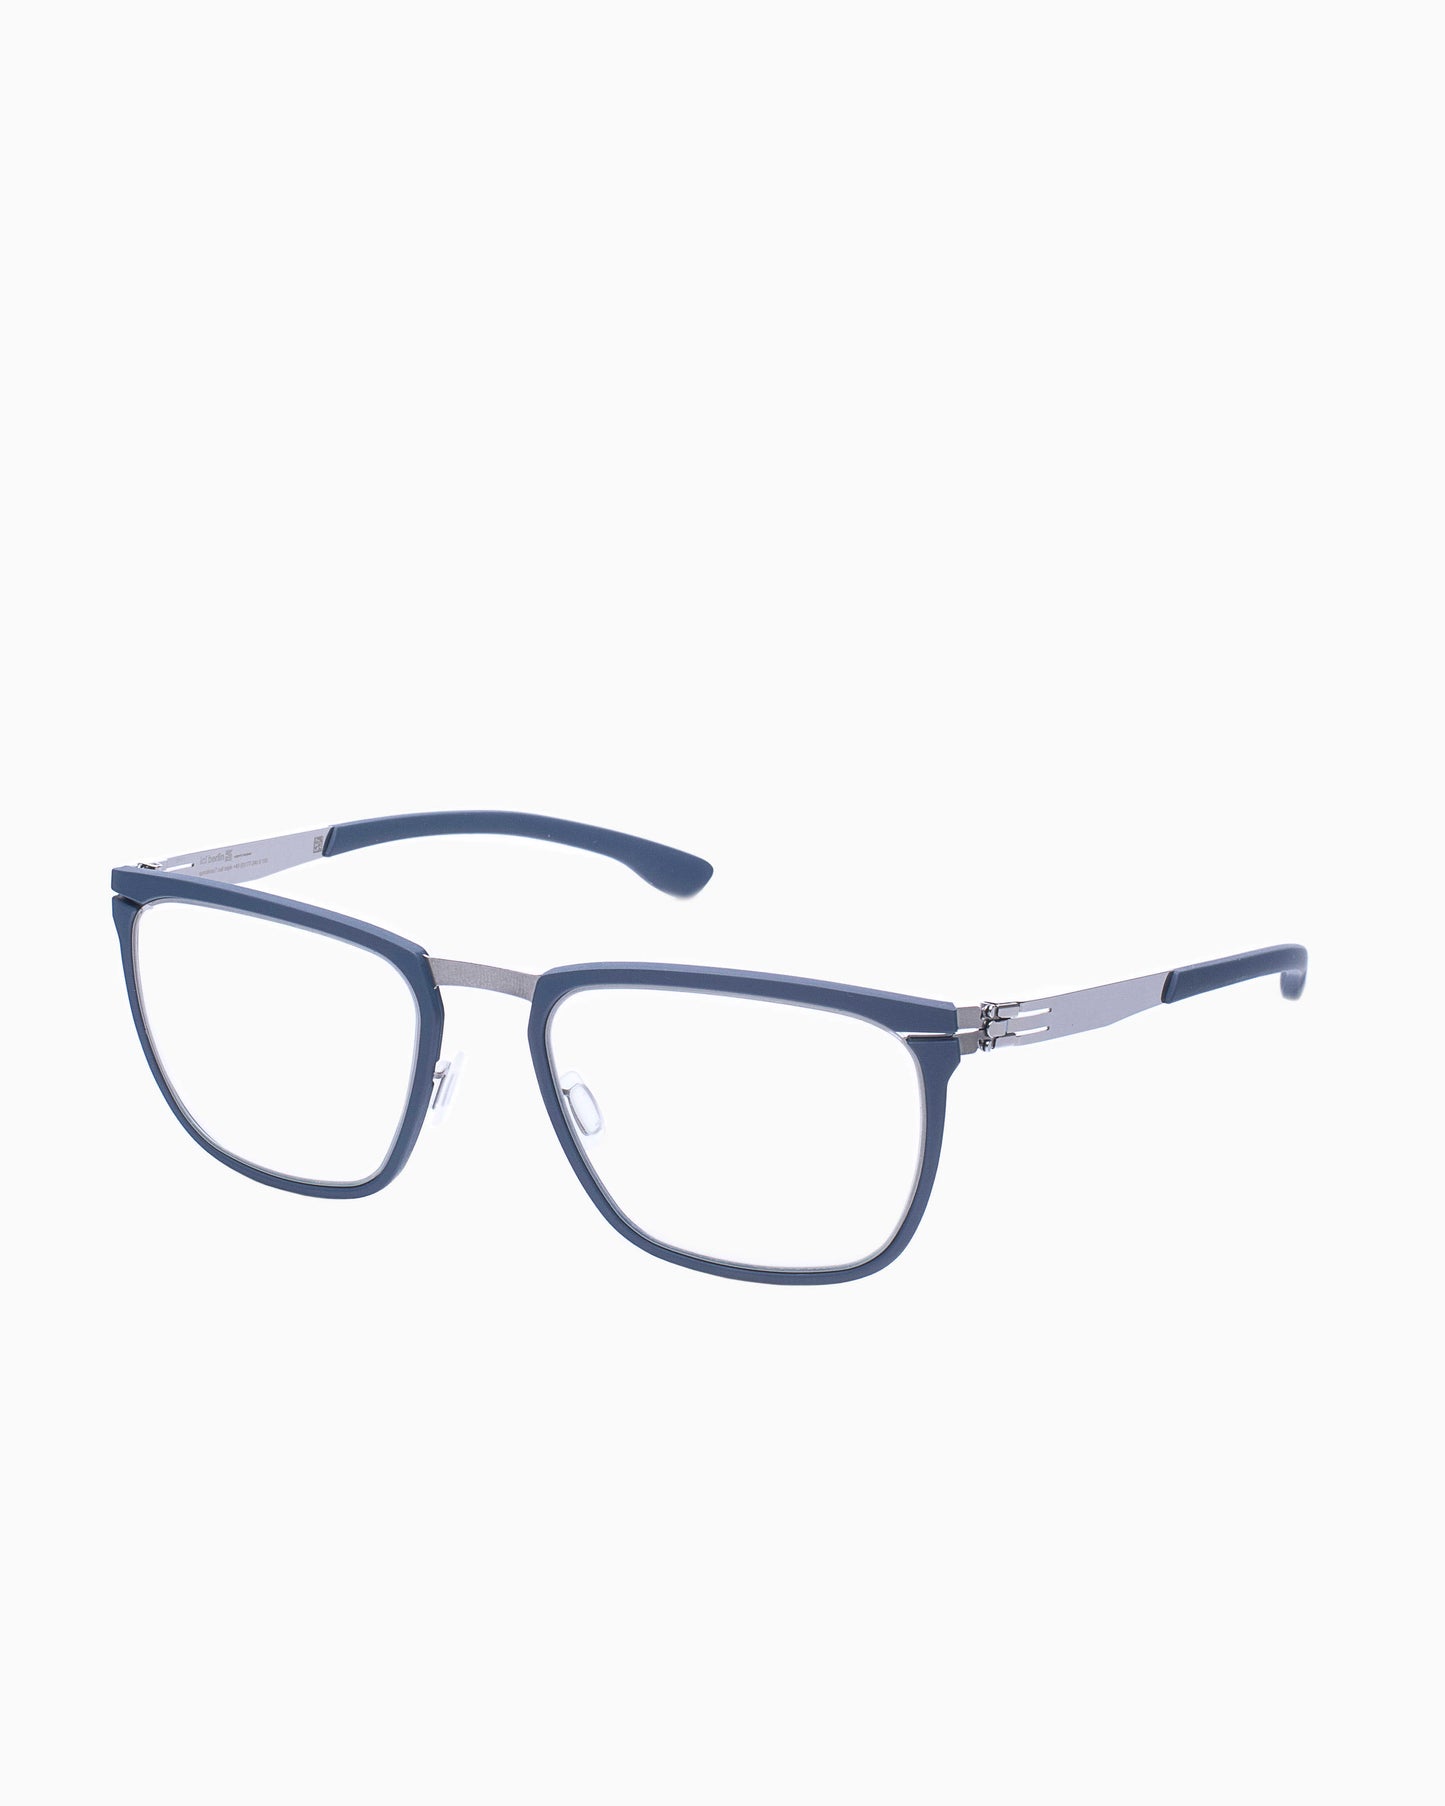 Ic Berlin - theeveryman - chrome-blue | glasses bar